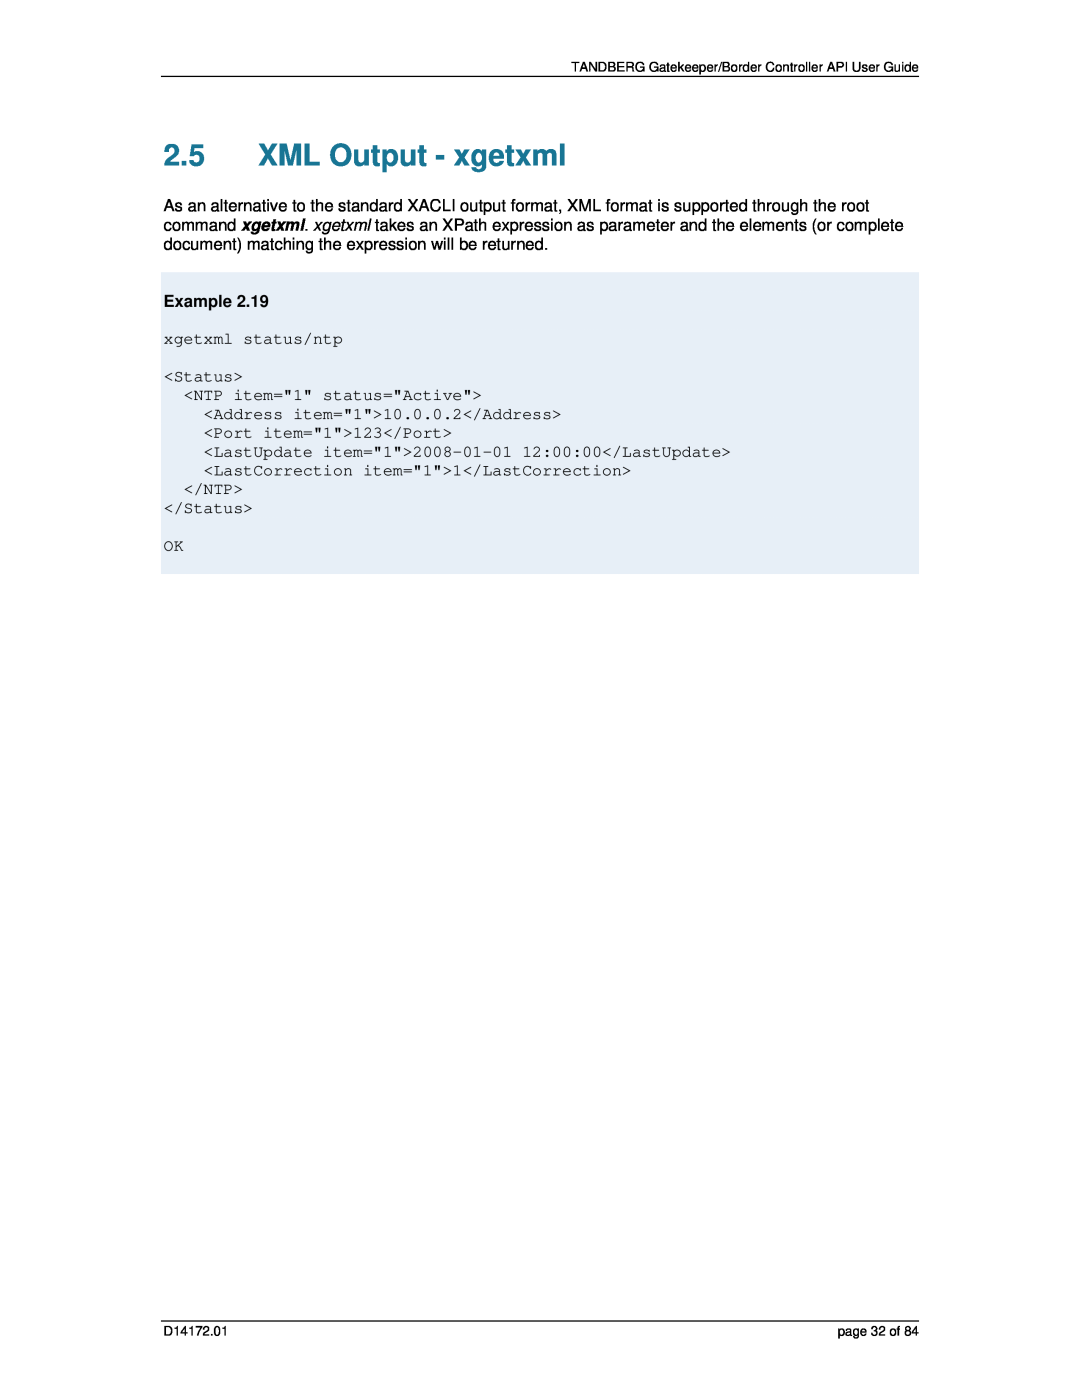 TANDBERG D14172.01 manual XML Output - xgetxml, Example, xgetxml status/ntp Status, NTP Status OK 